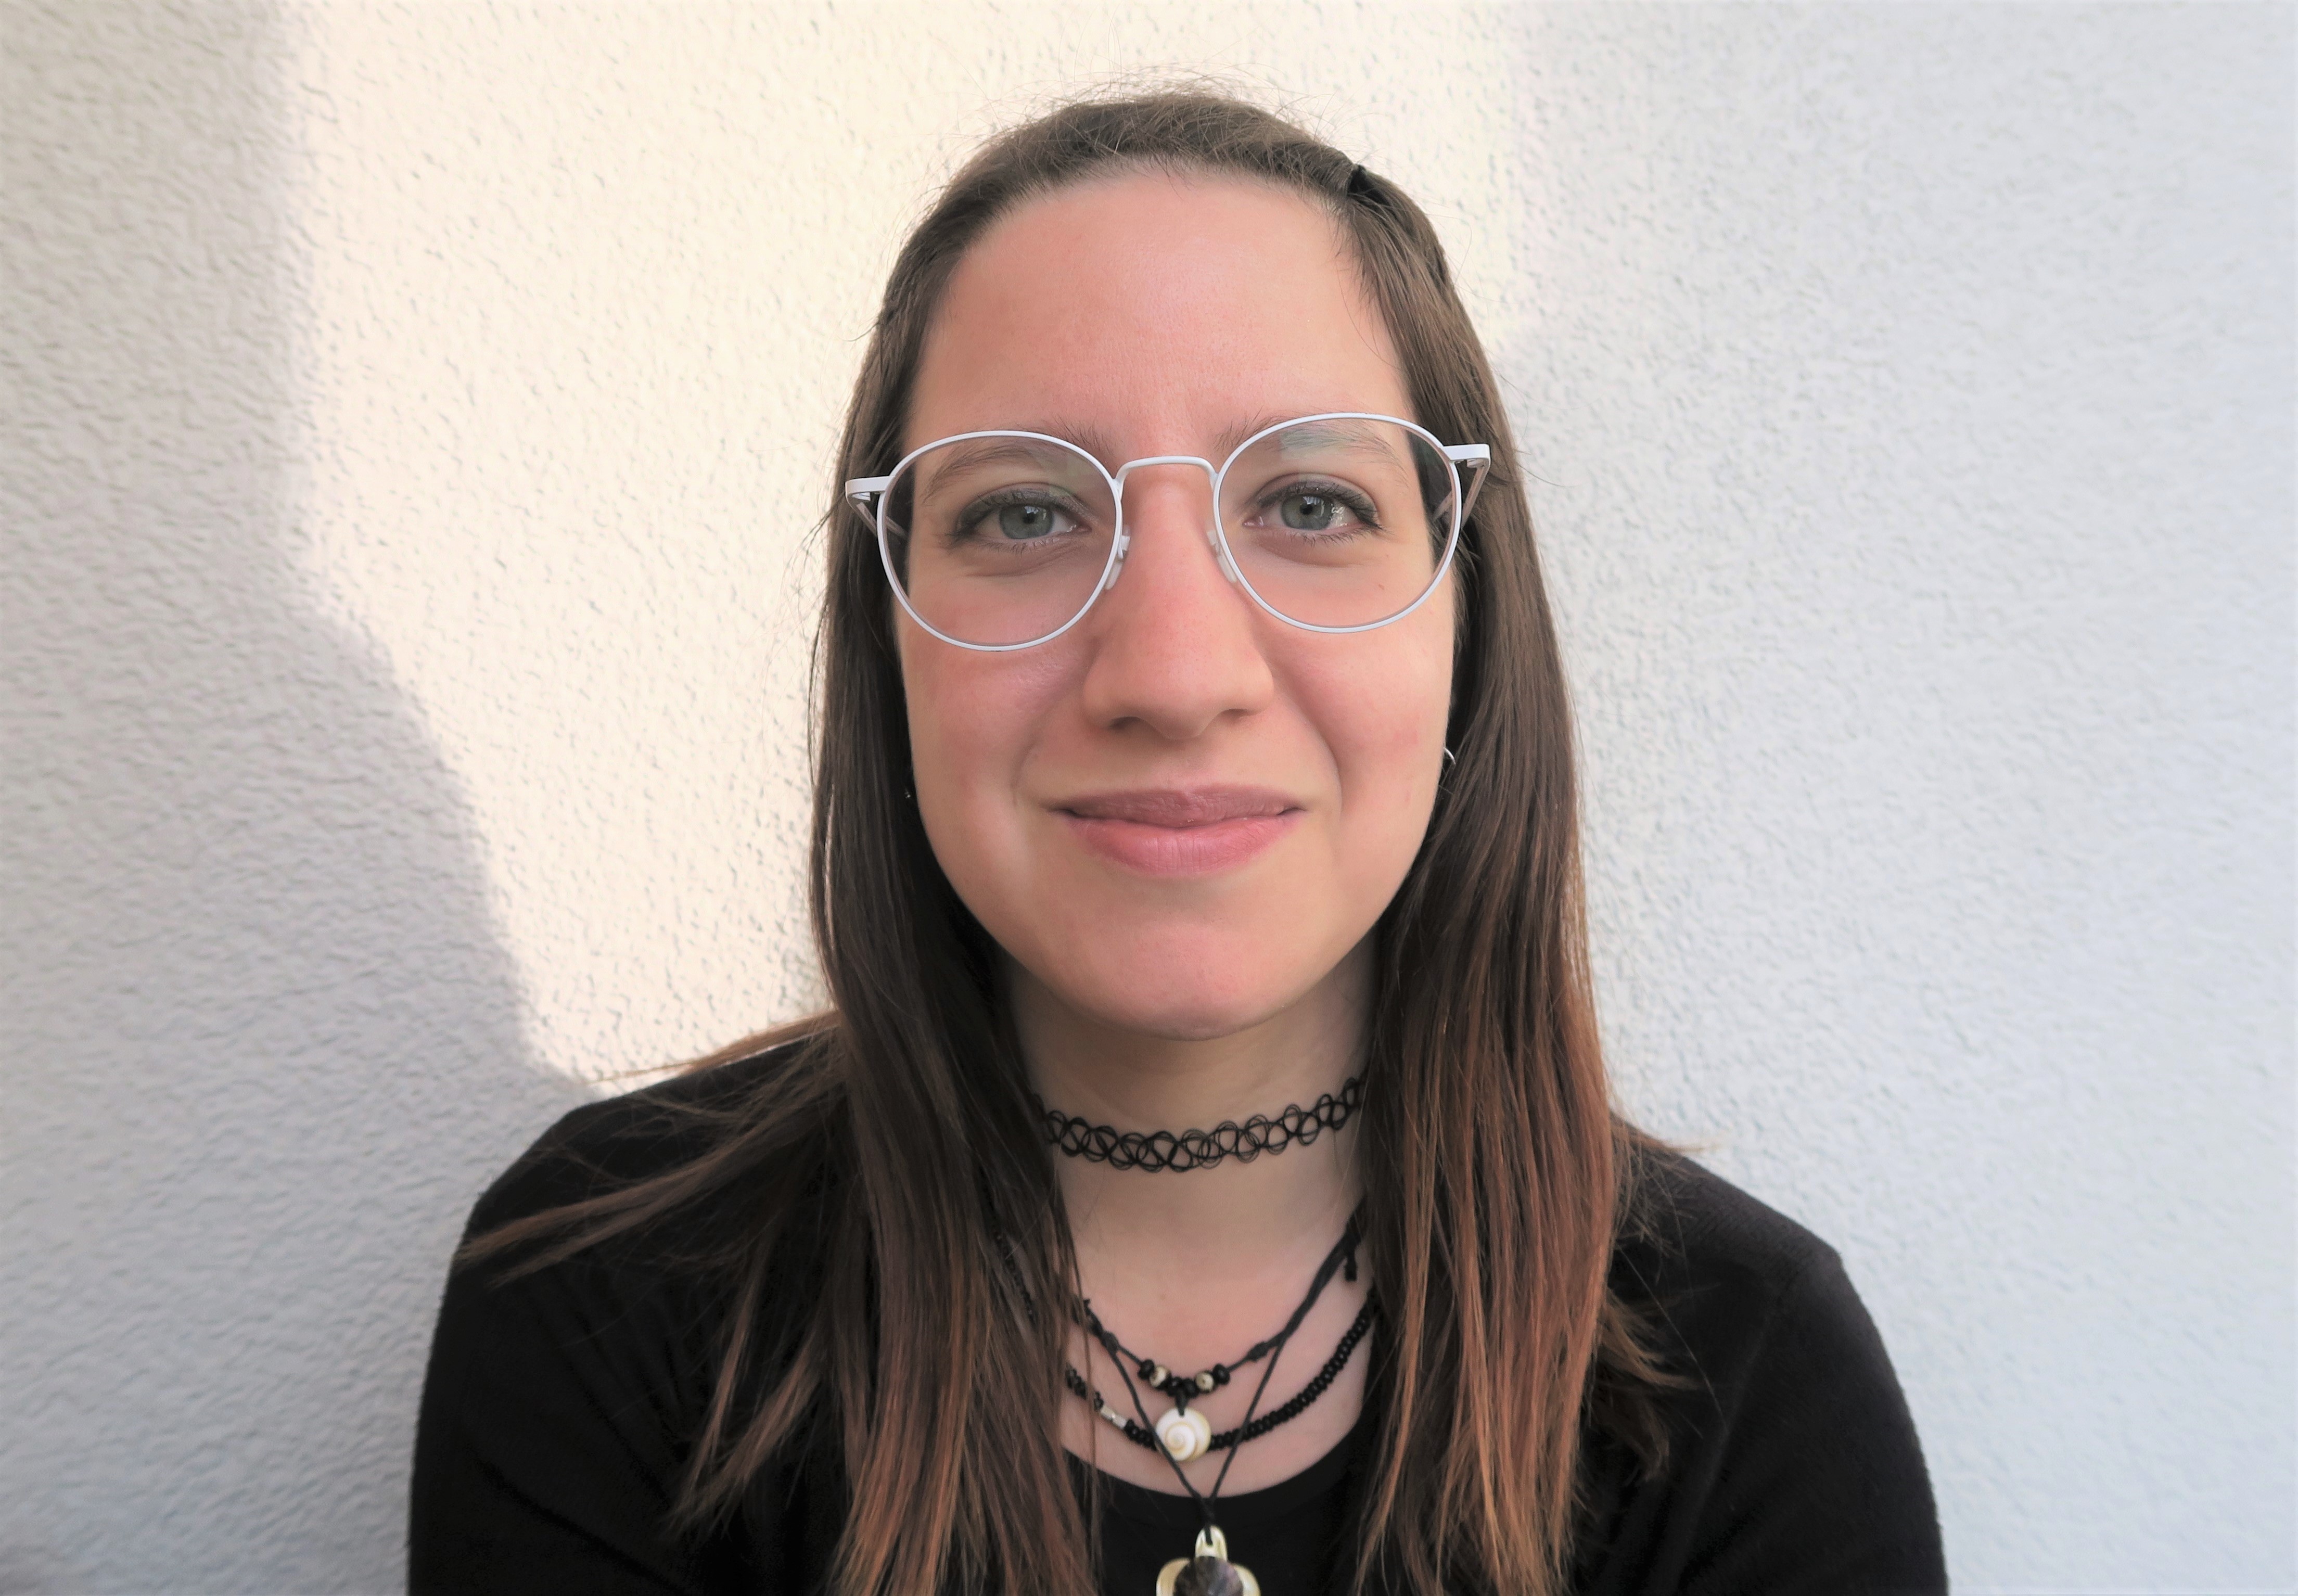 Headshot of Marta Cortesão in a black shirt wearing glasses.